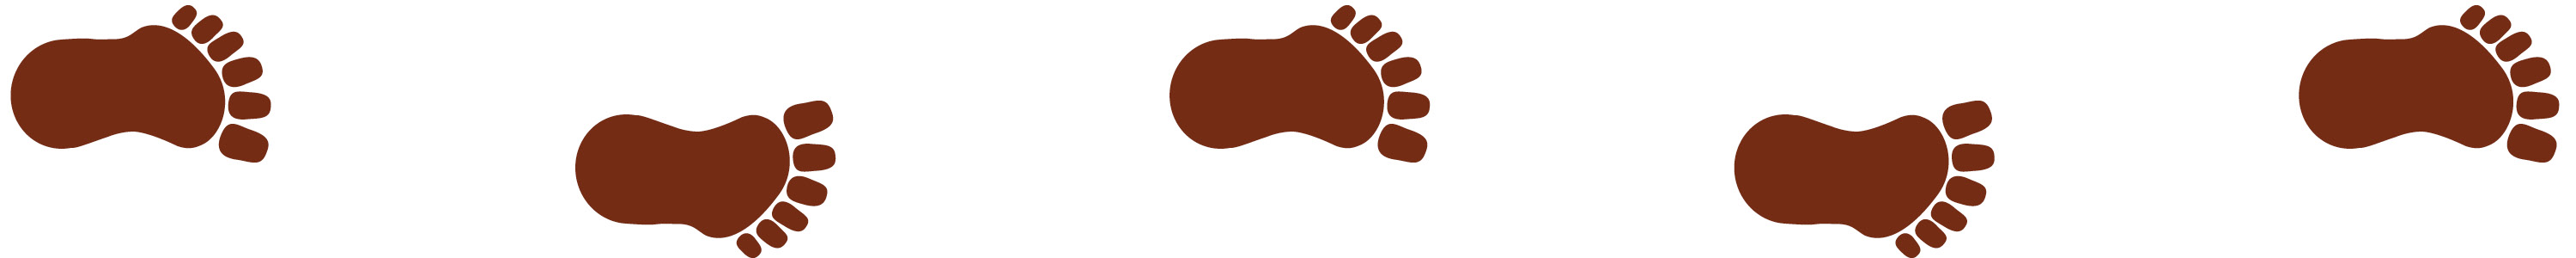 2022 Conference Logo footprints